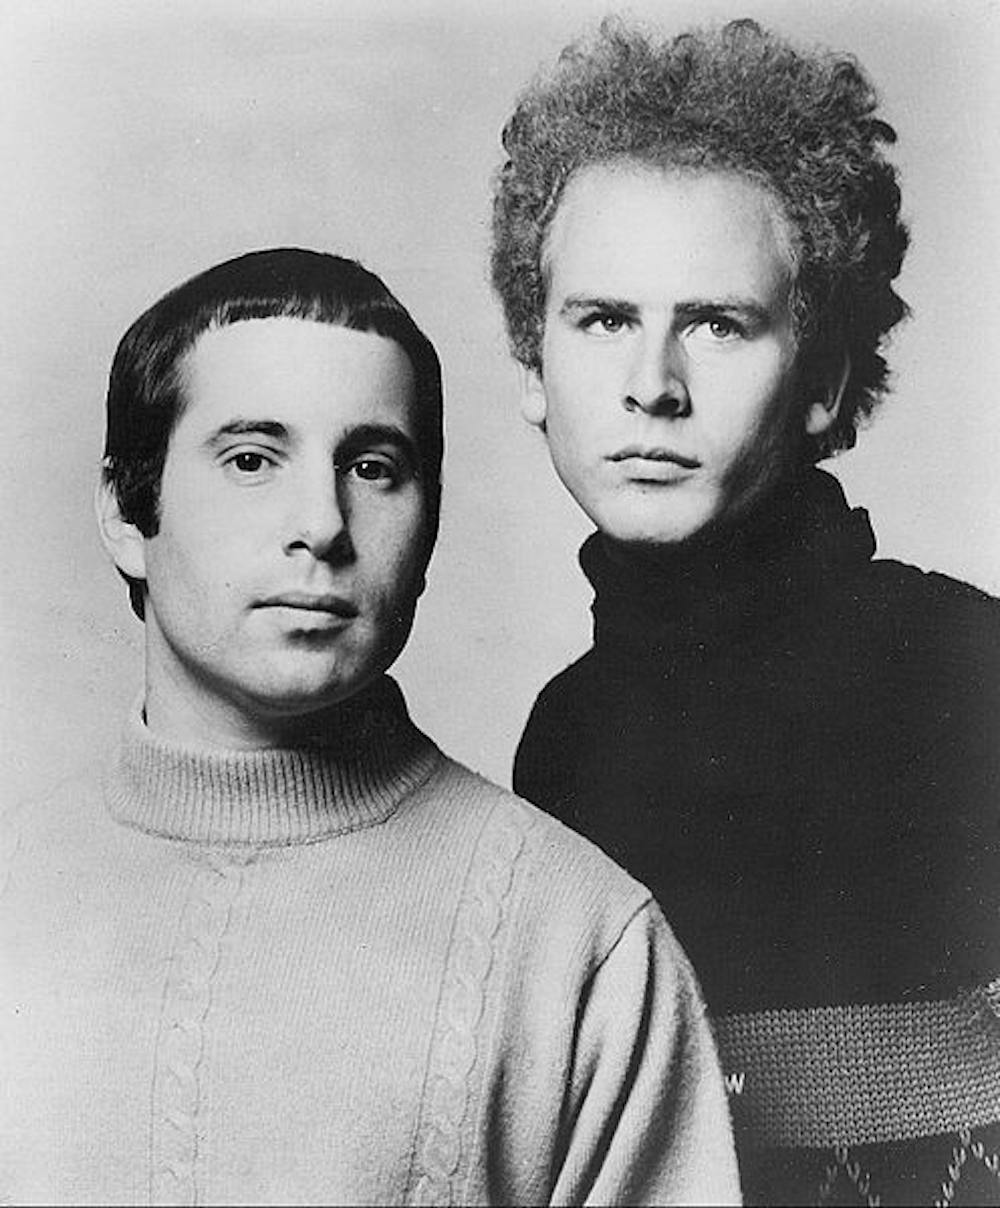 Simon_and_Garfunkel_1968.jpg